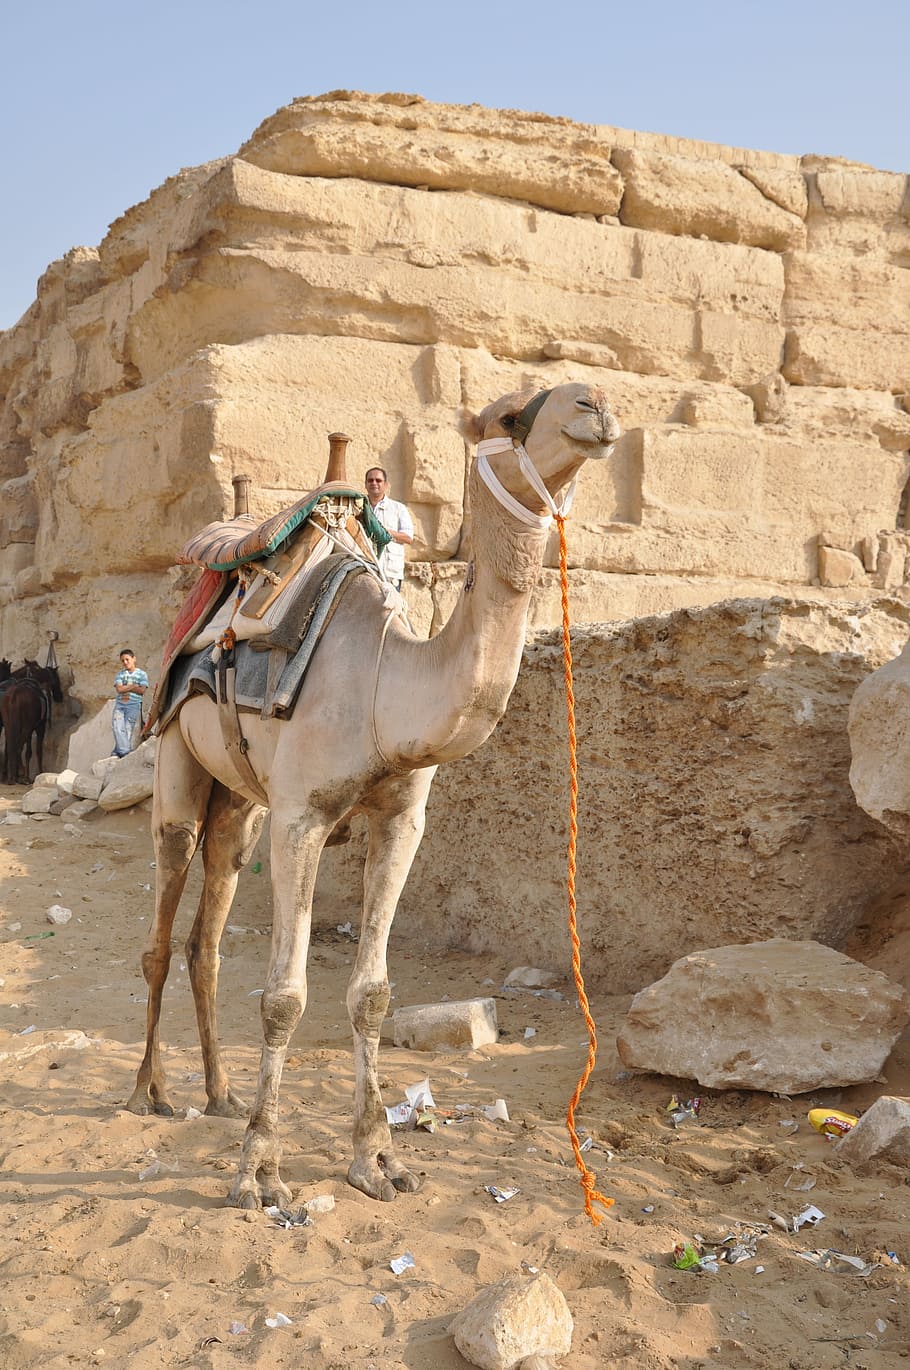 Camelo, Dromedário, Egito, Pirâmides, turista, templo, hieróglifos, nilo, faraó, templo egípcio